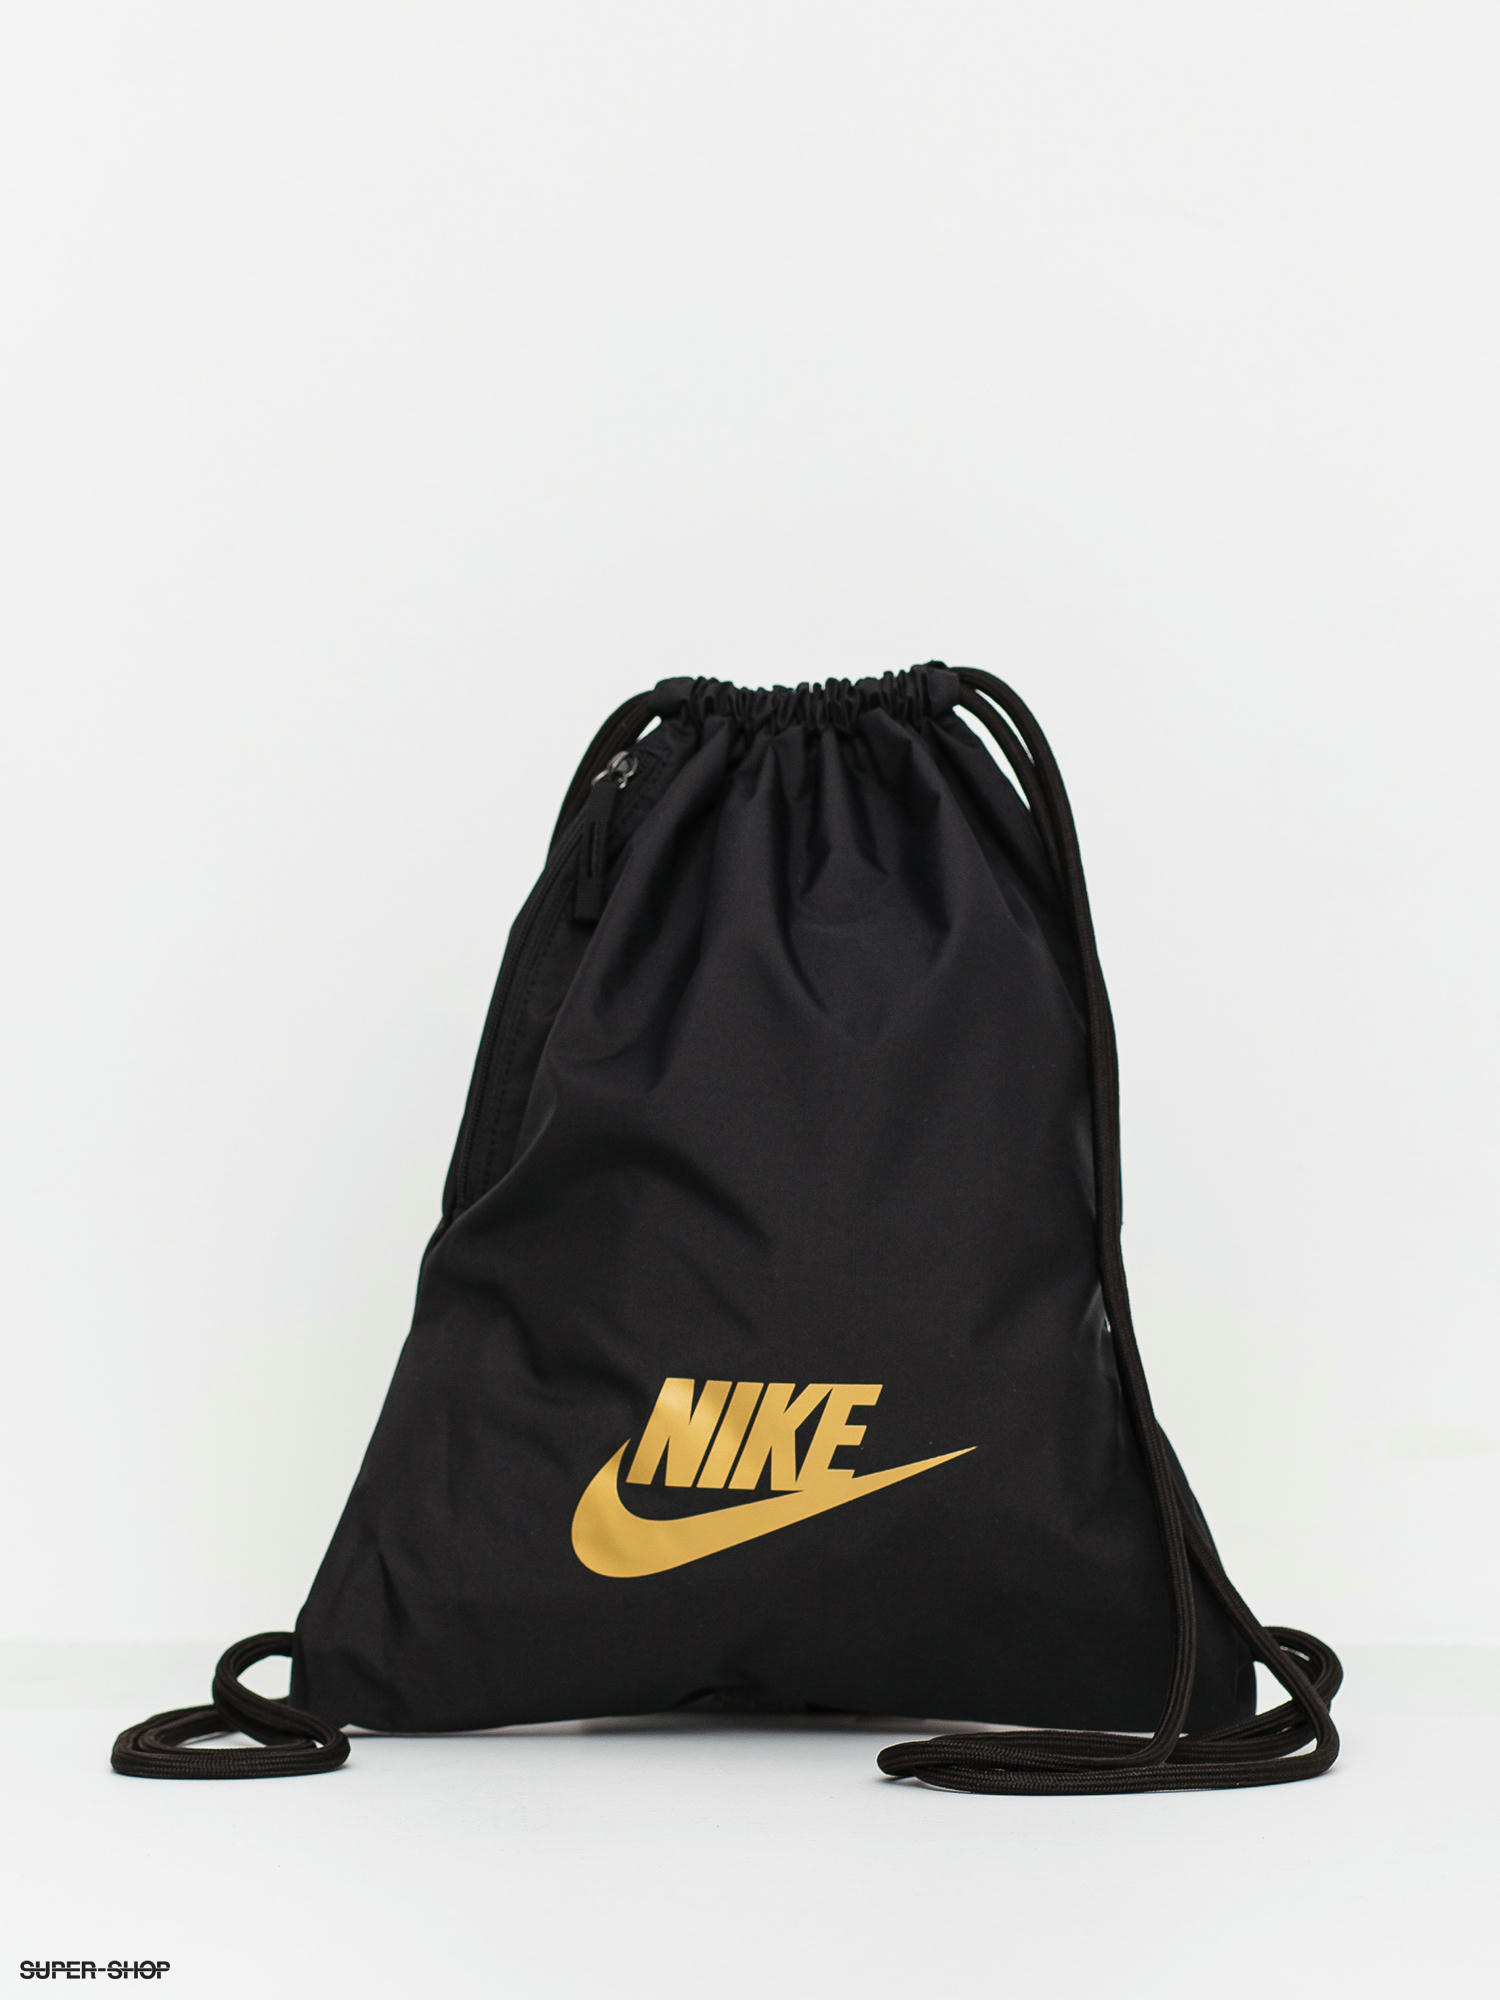 nike gold and black backpack